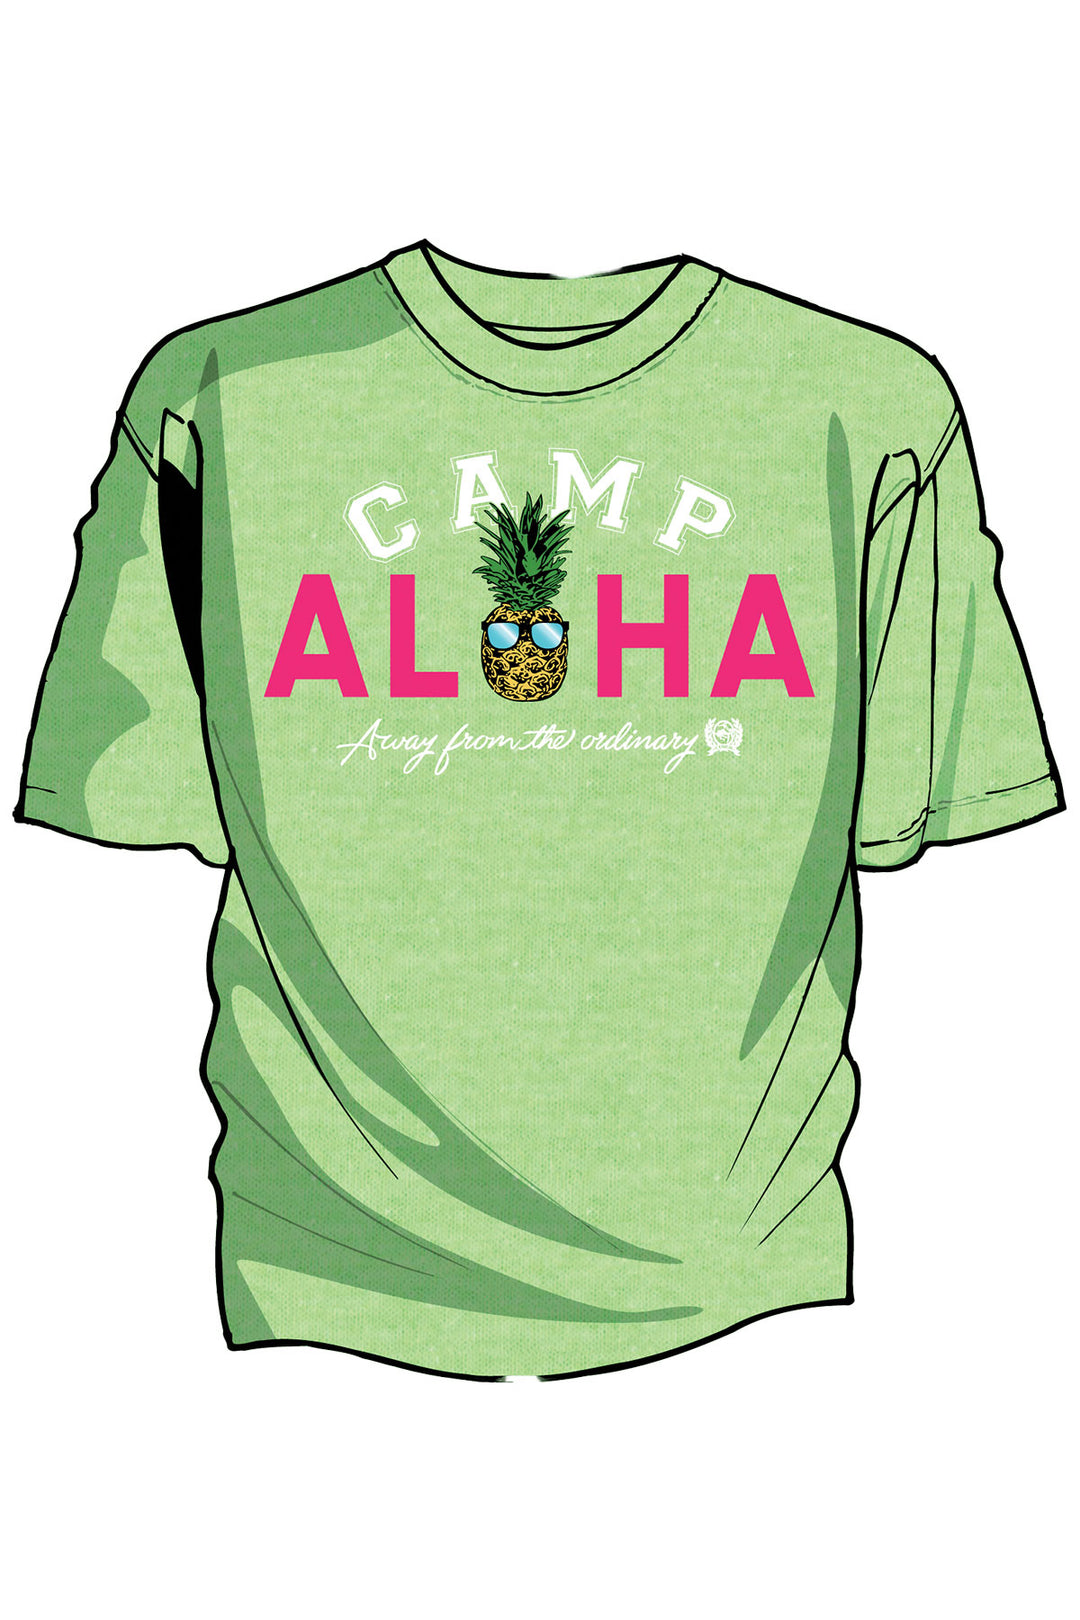 Cinch | Away From The Ordinary Camp Aloha T-Shirt